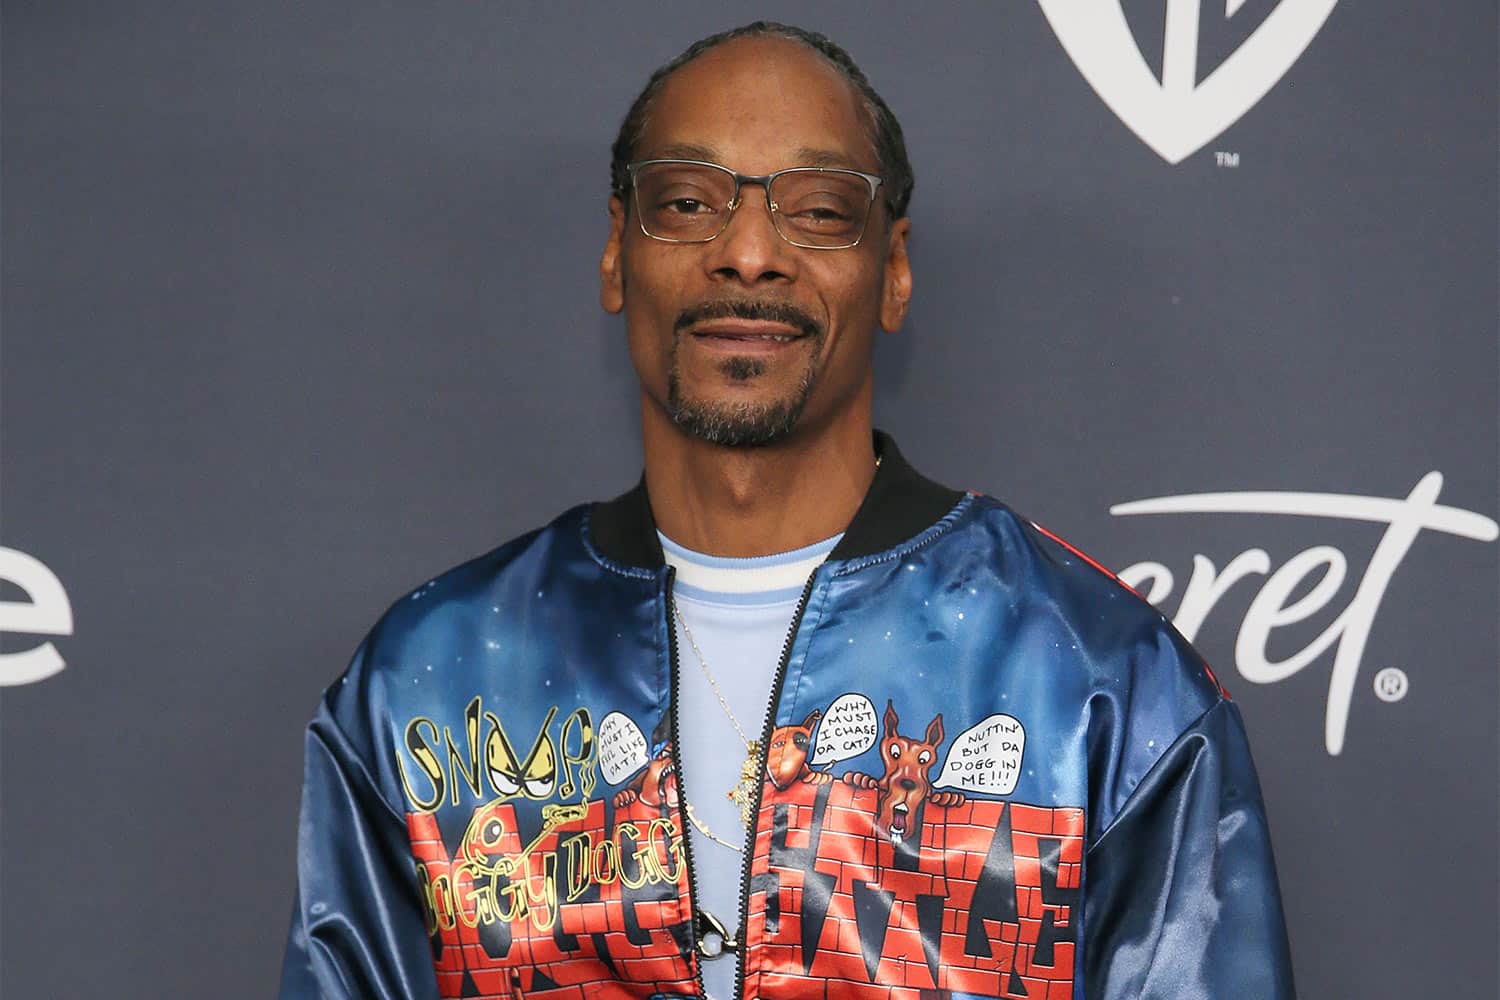 Snoop-dogg-joins-crypto-casino-as-chief-ganjaroo-officer